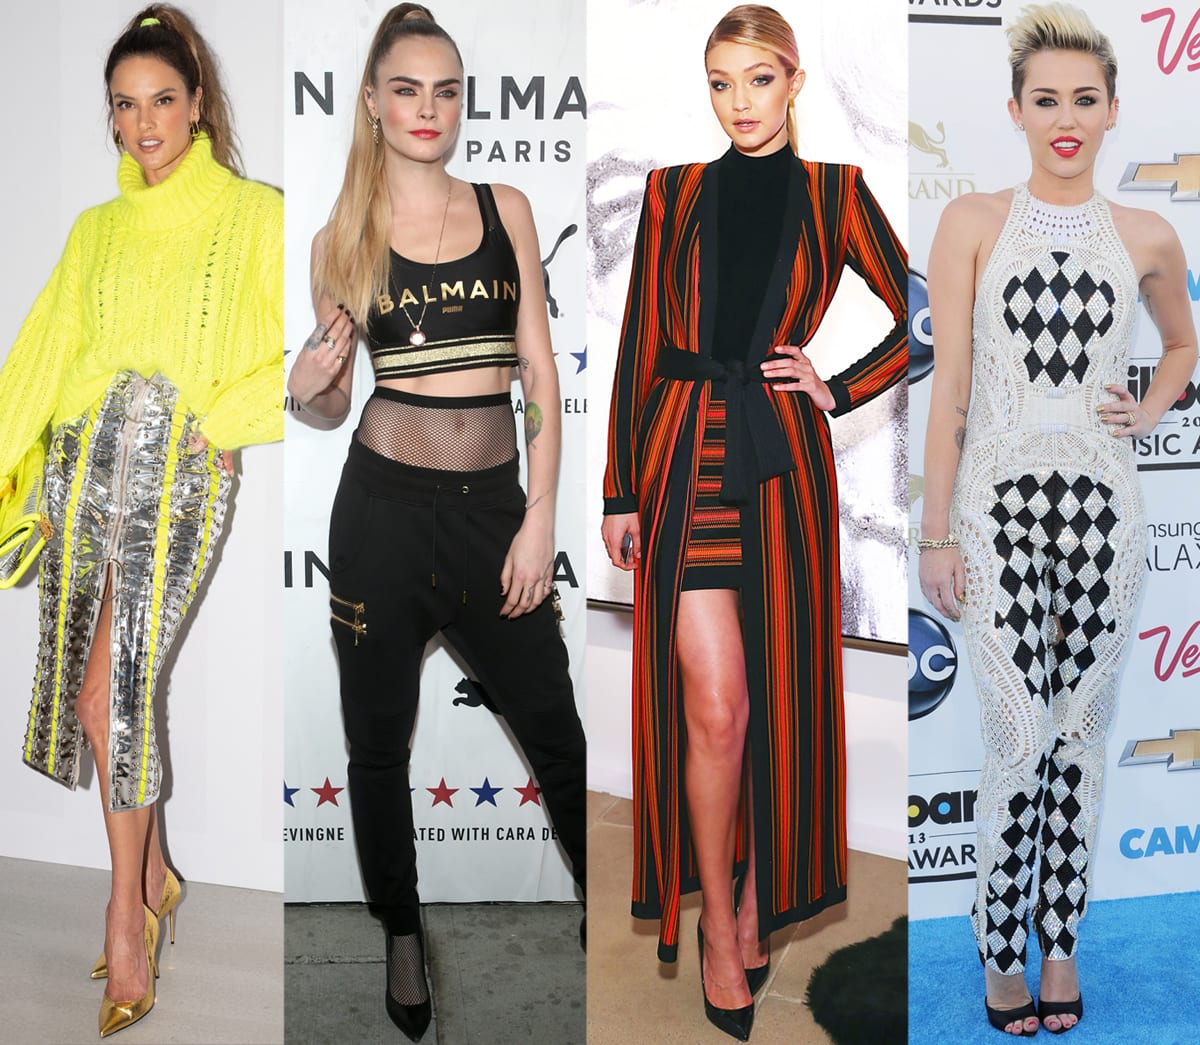 Alessandra Ambrosio, Cara Delevingne, Gigi Hadid, and Miley Cyrus in Balmain outfits